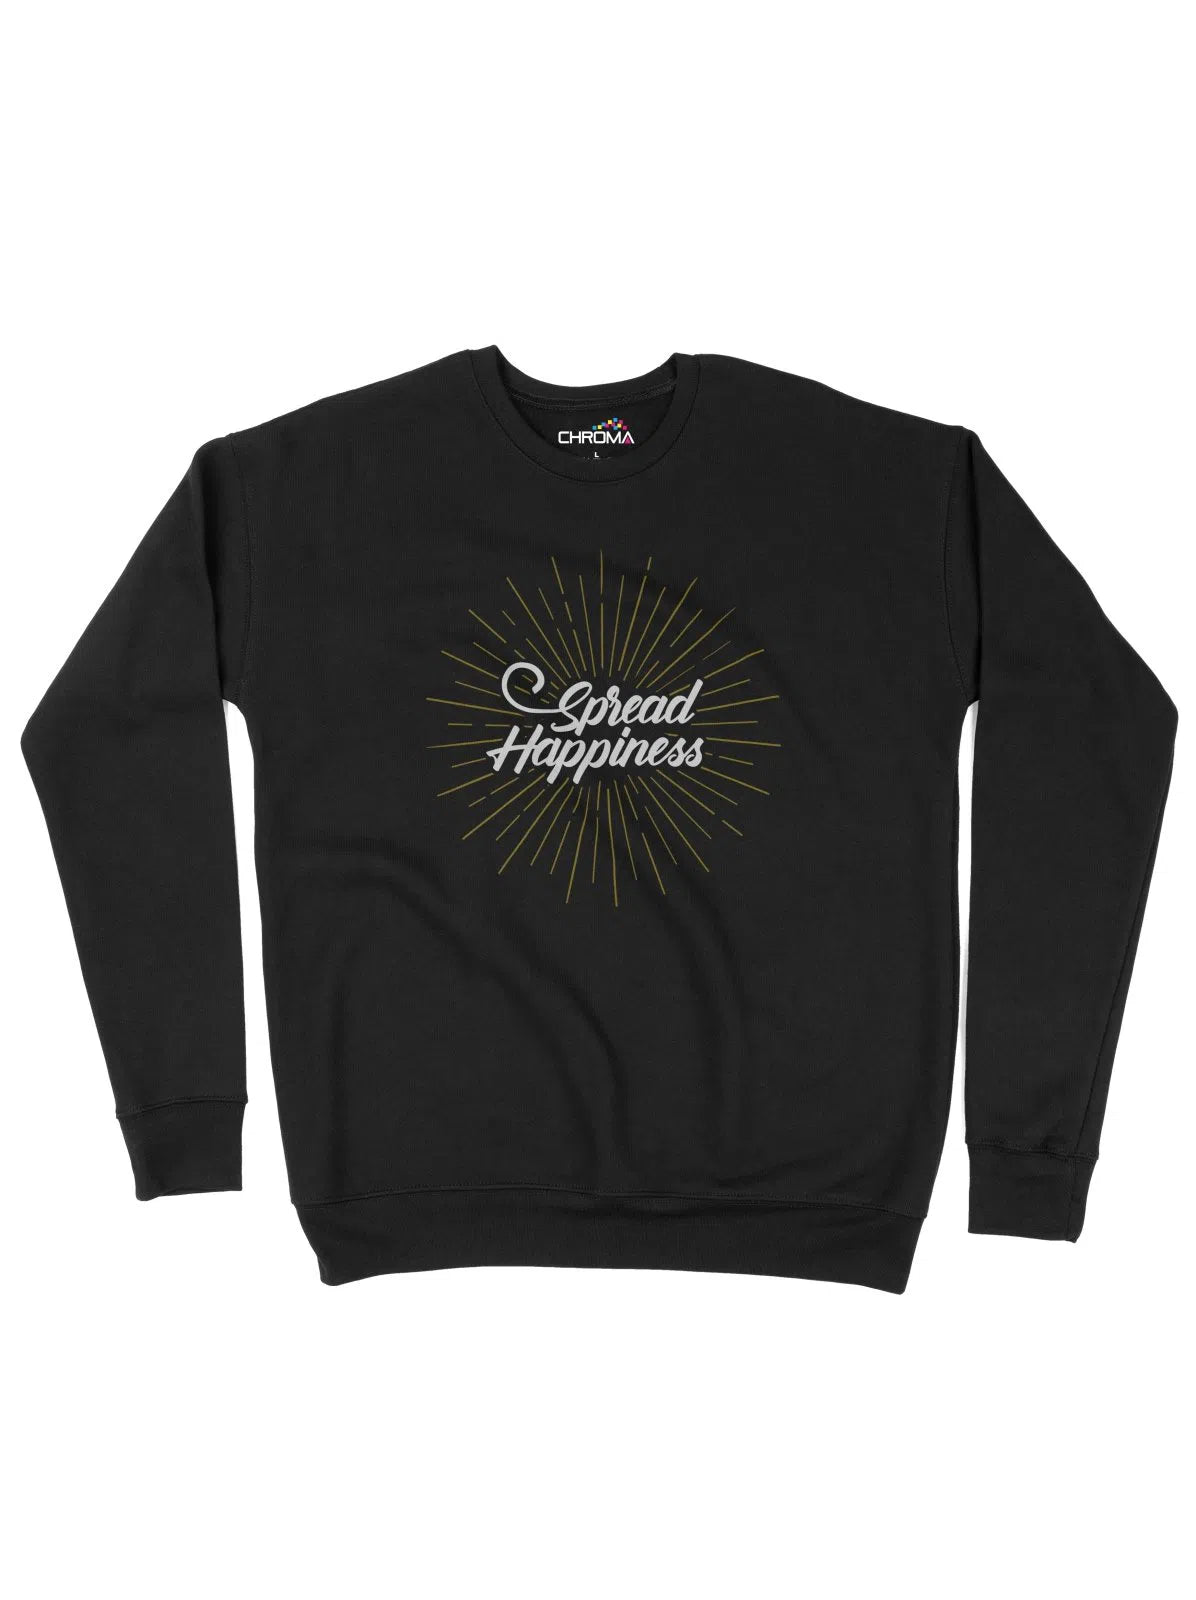 Spread Happiness Unisex Adult Sweatshirt - Chroma